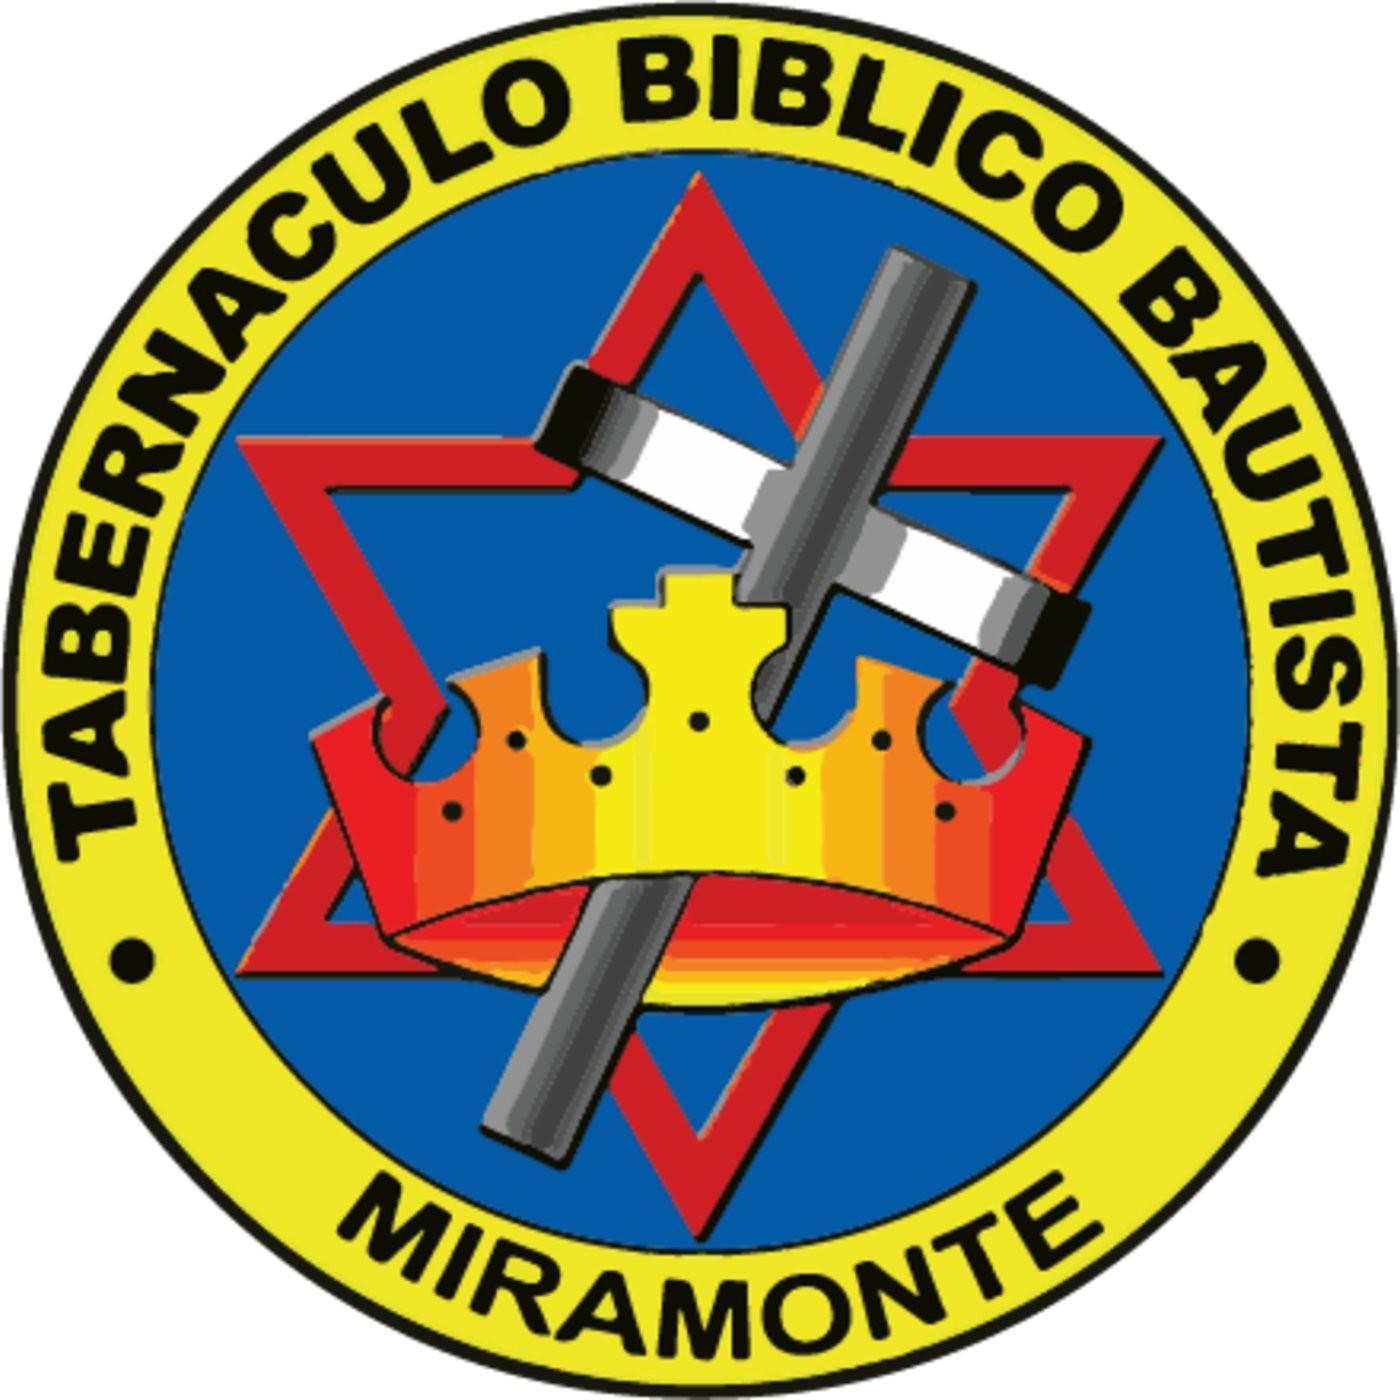 TABE Logo - Listen to the Sermones de Taber Miramonte Episode - Las Mañas on ...